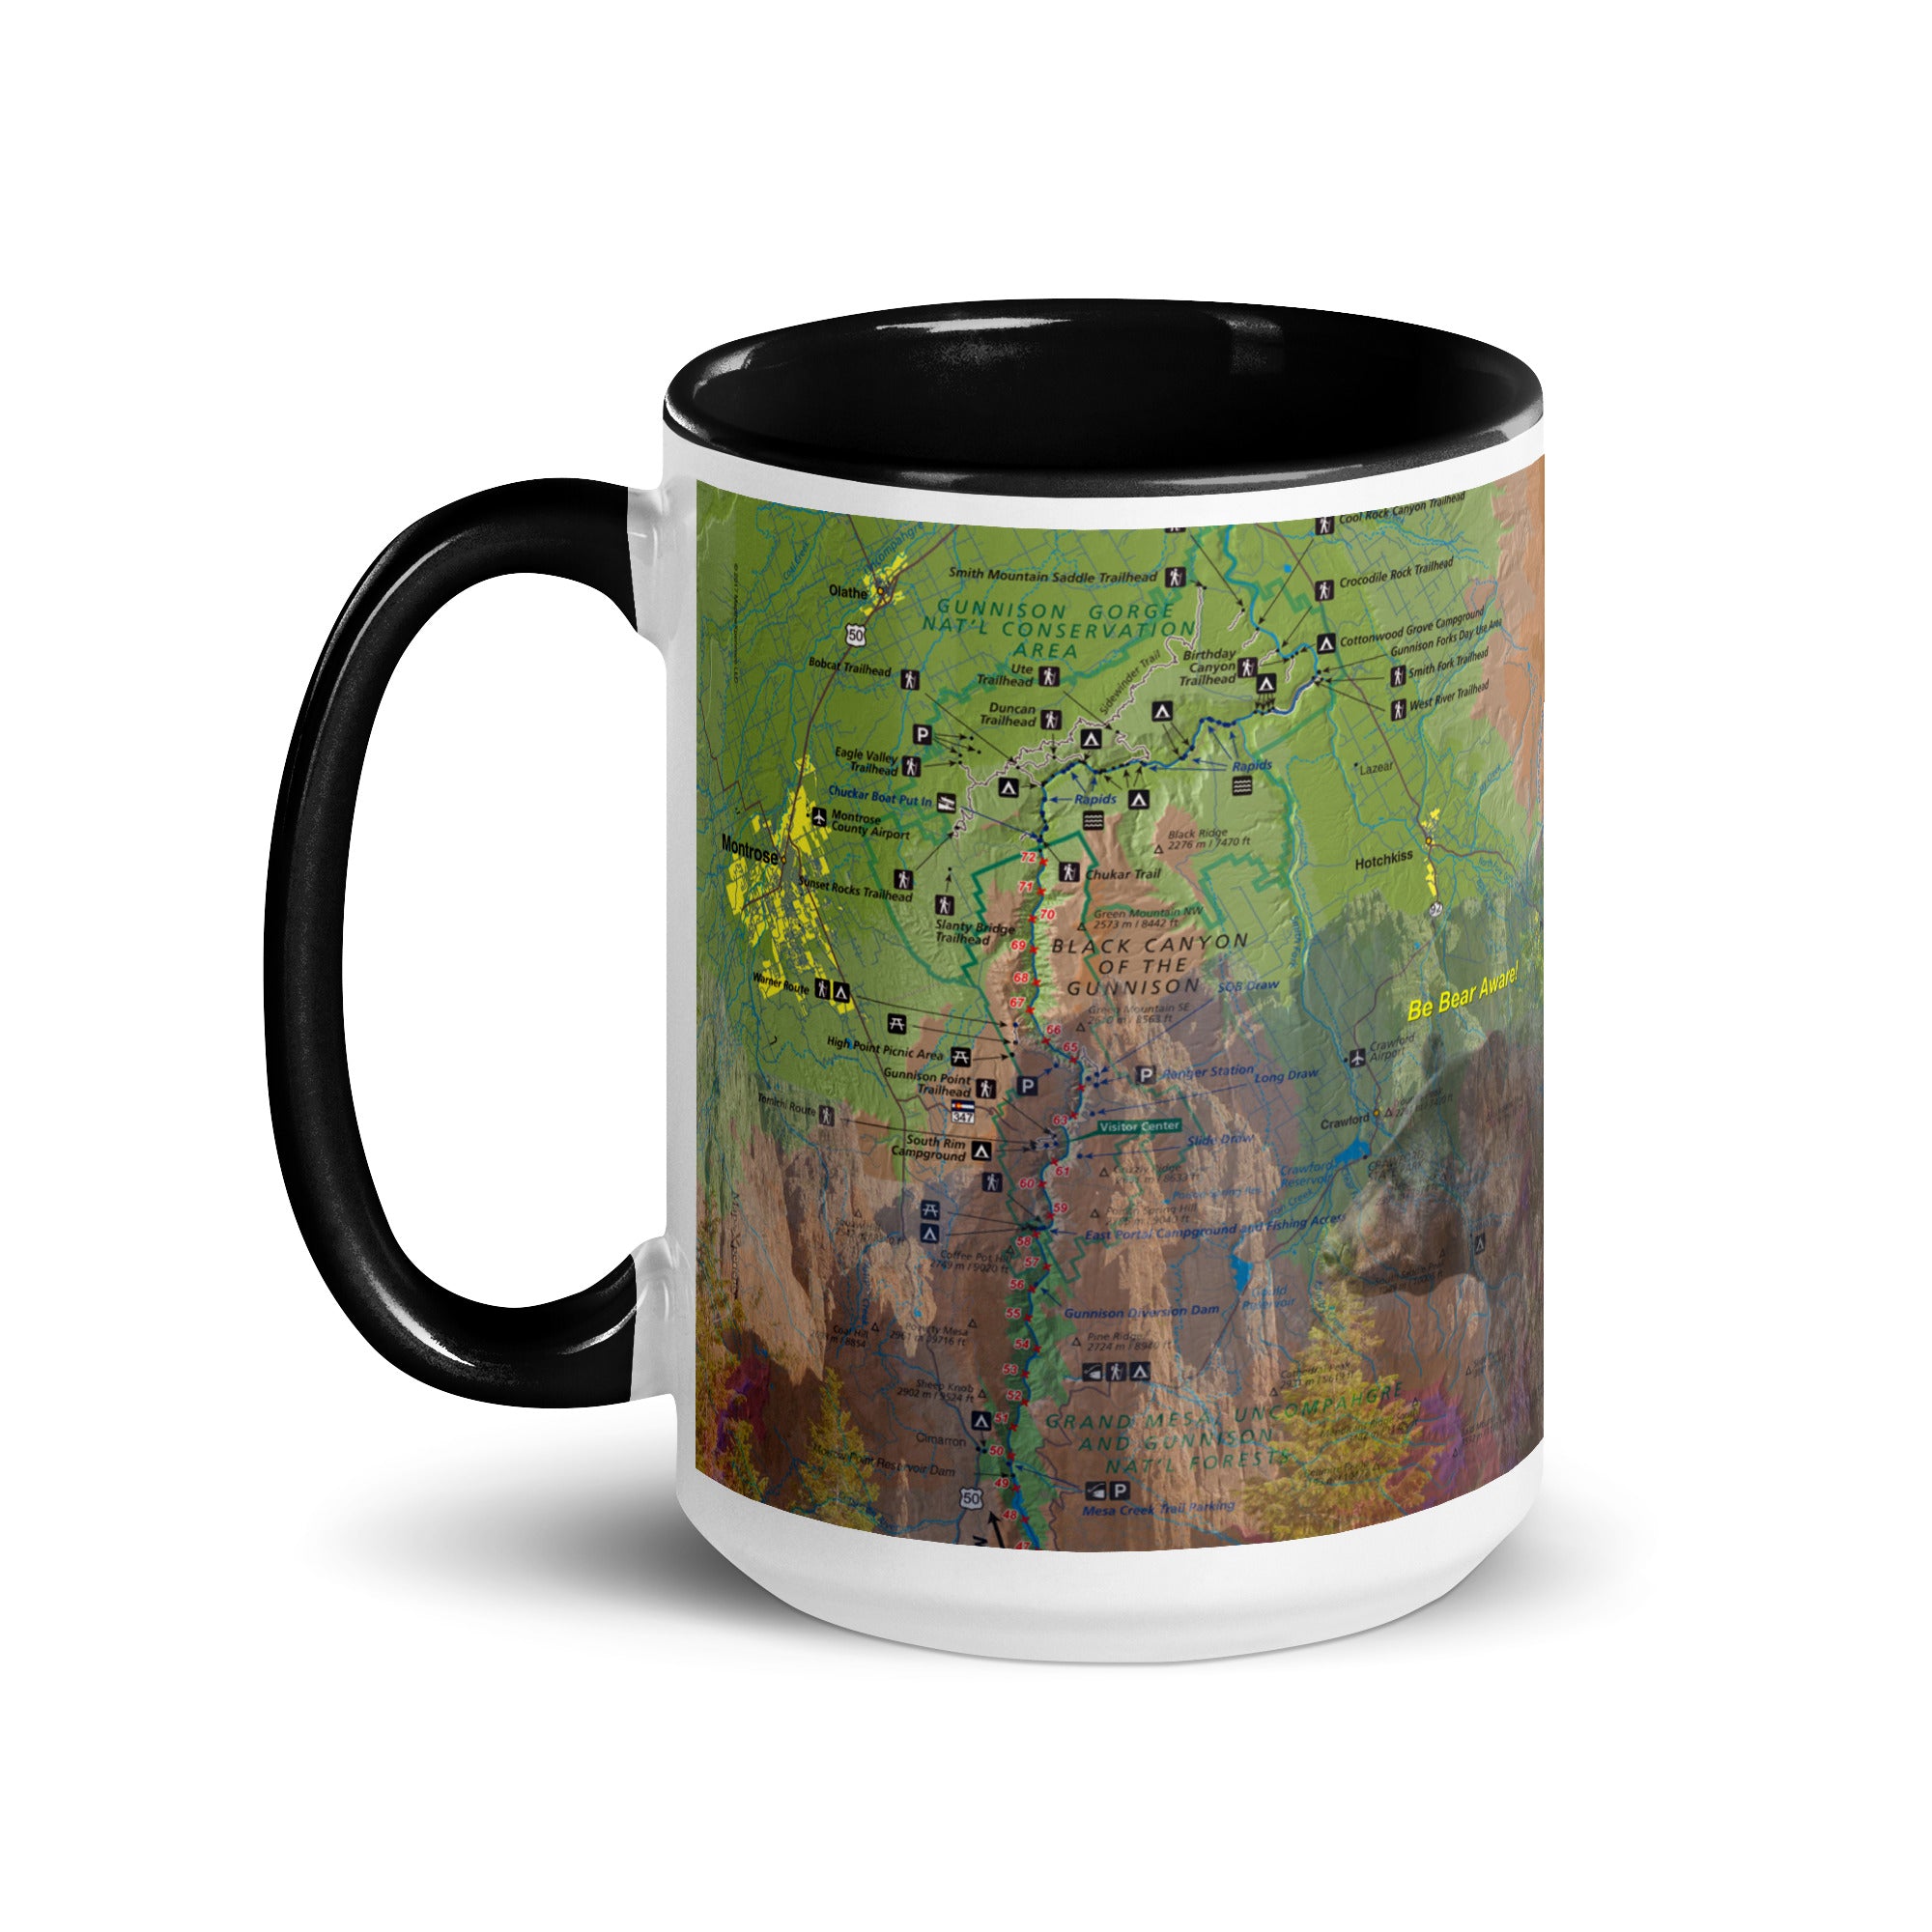 Black Canyon of the Gunnison National Park Mug with Black Inside